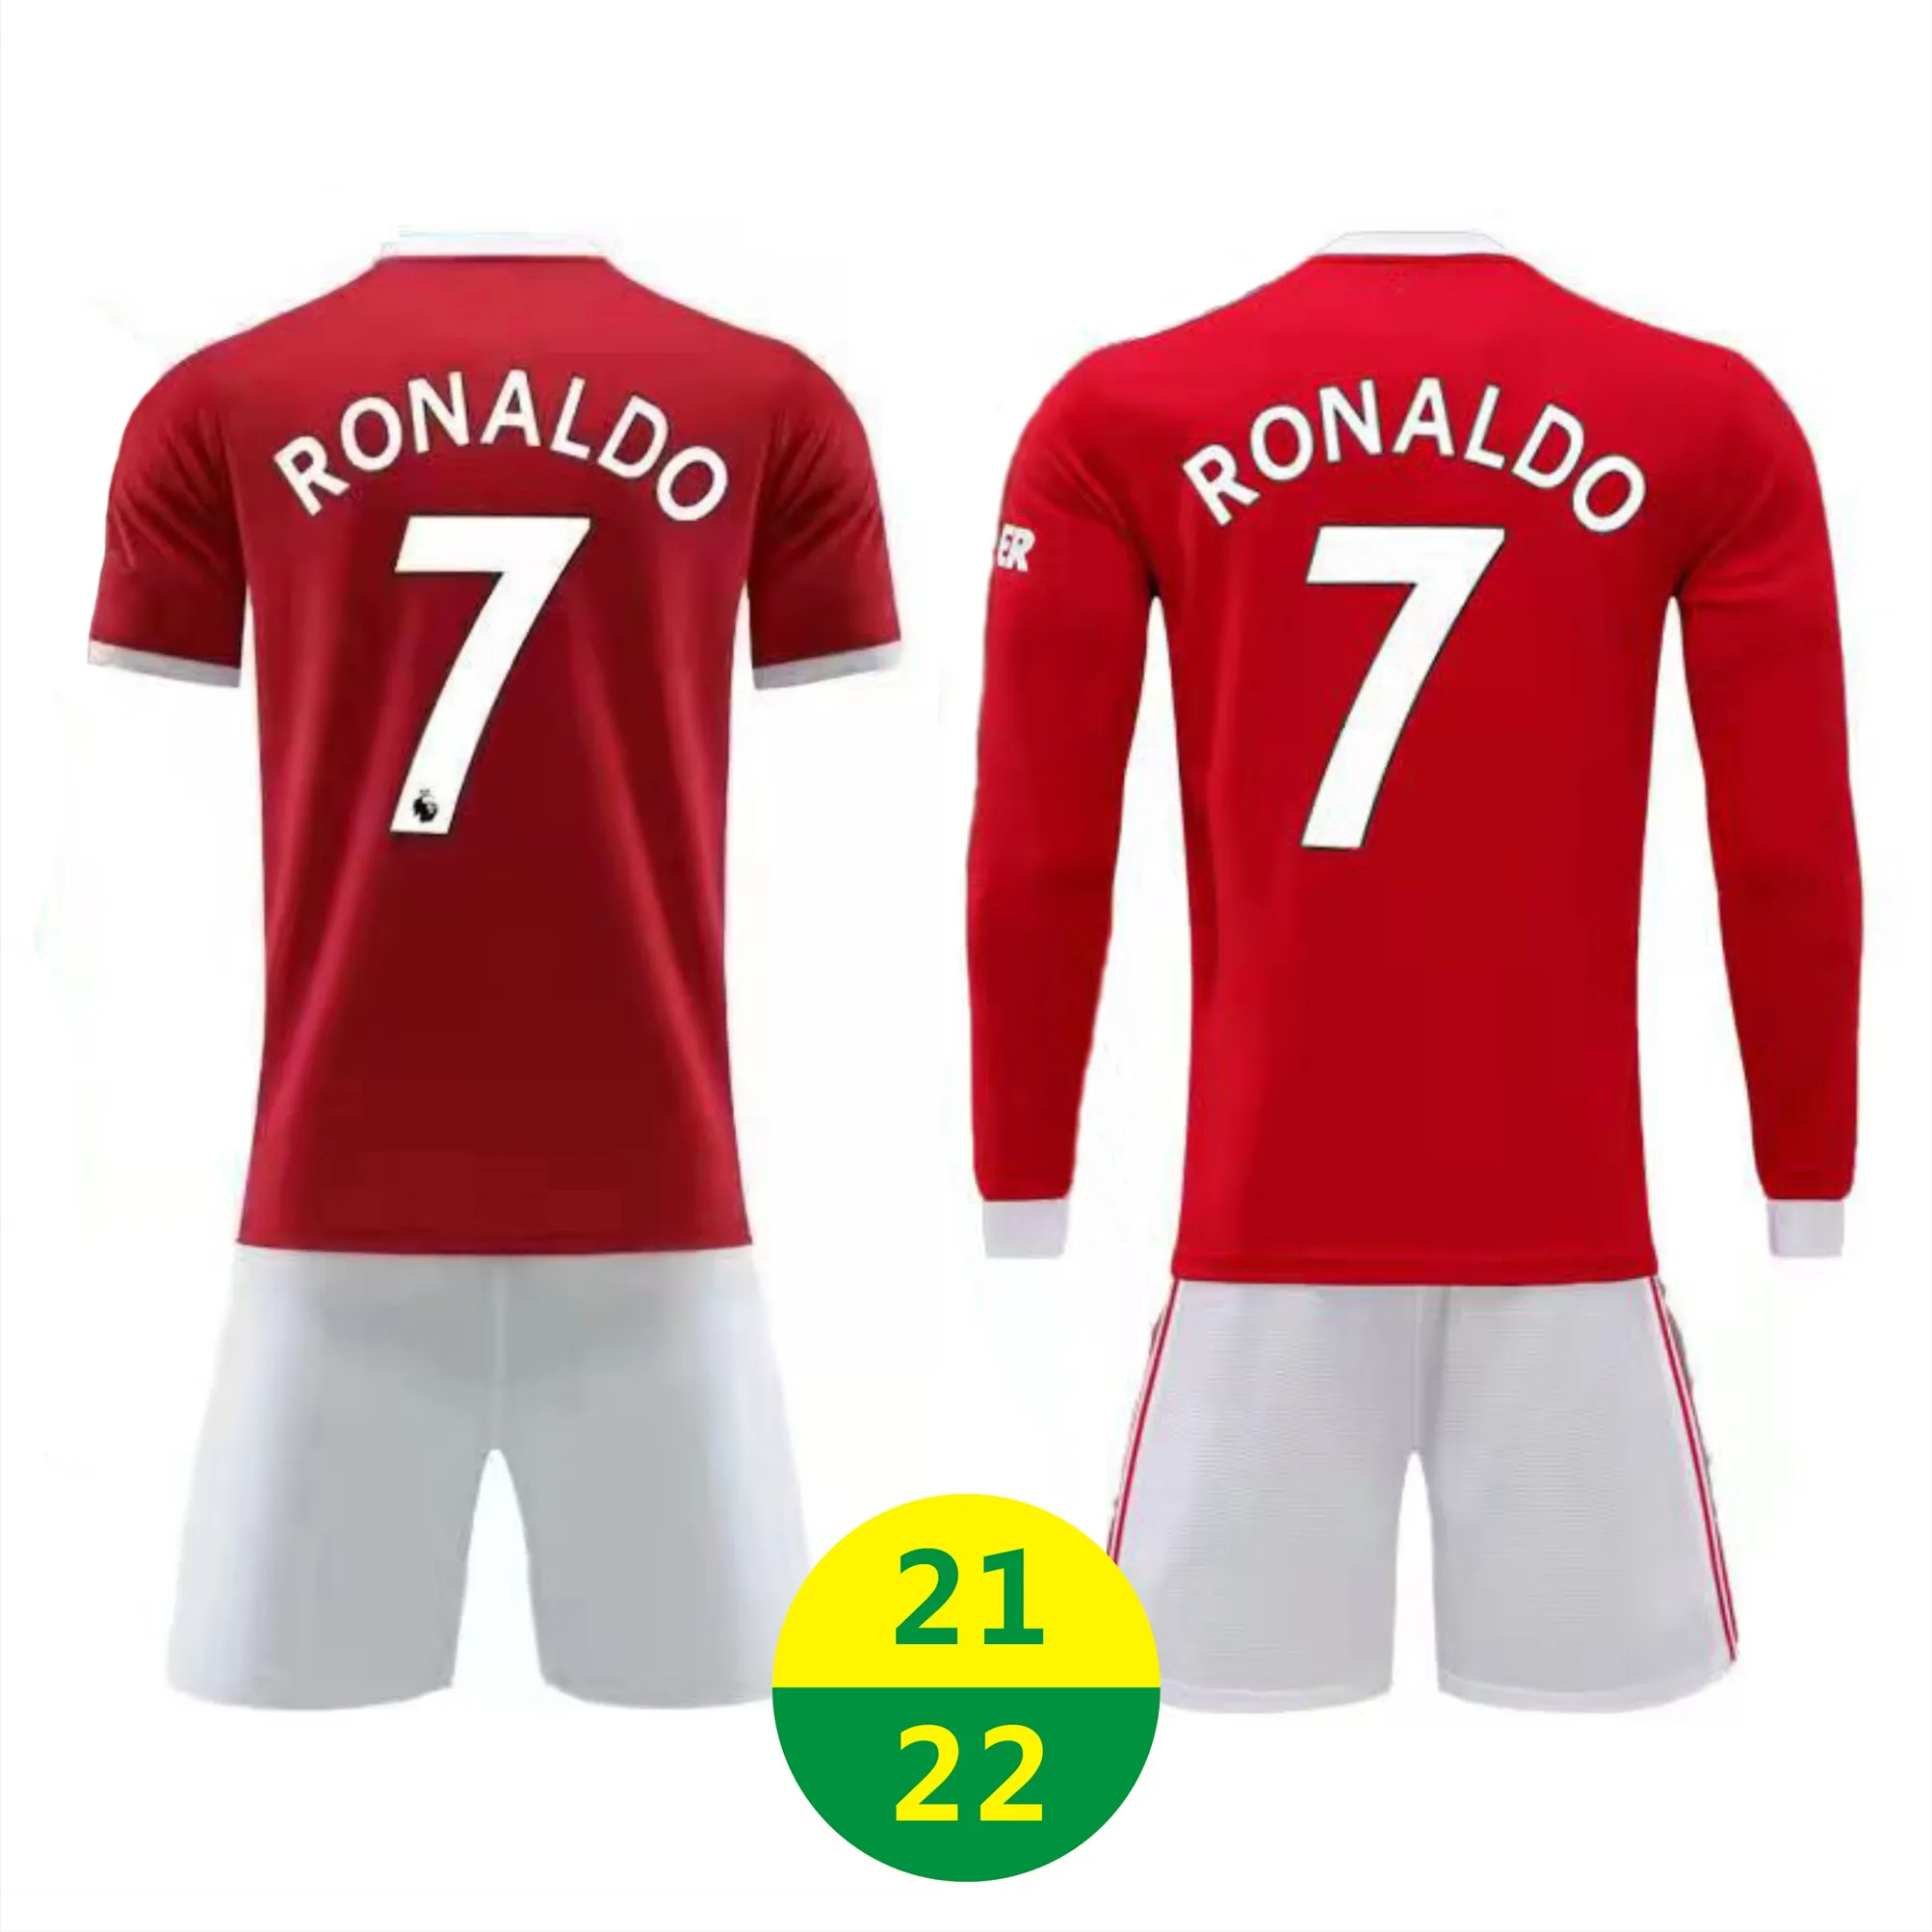 US FAST 2021 Home Jerseys Ronaldo Fußball tragen rot # 7 Jersey Erwachsene lange Kurzarmanzug Trainingsanzug 2022 Jungen Mädchen Fußball Sportswear Shirts 21 22 mit logo # MLZ-21A1